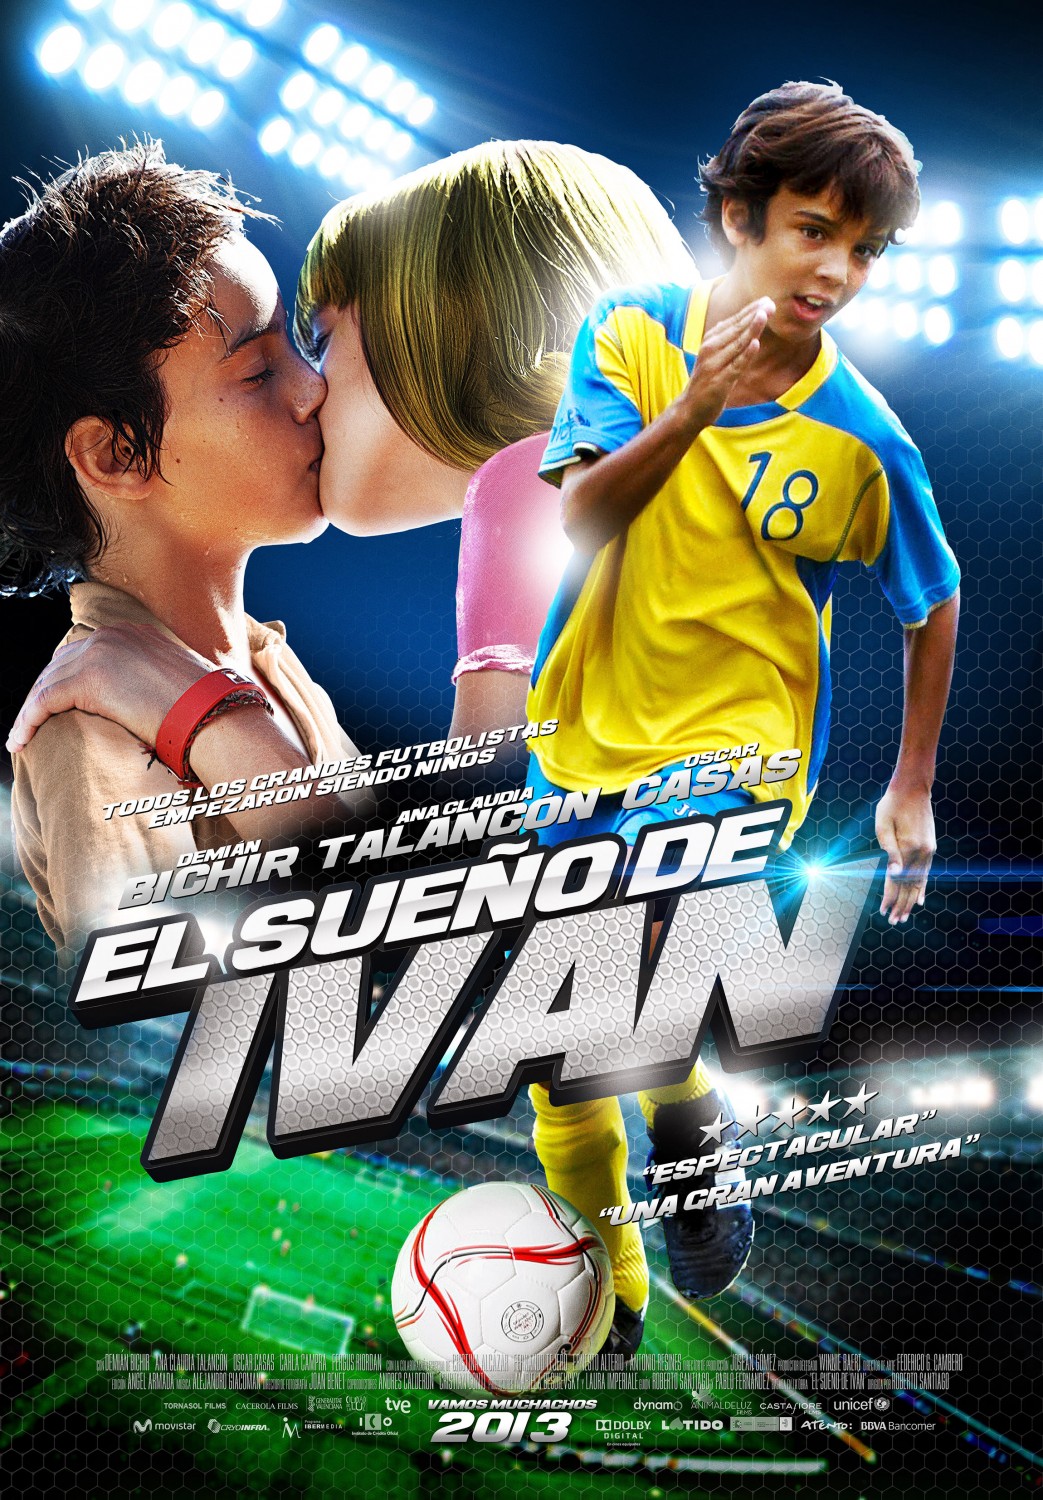 Extra Large Movie Poster Image for El sueño de Iván (#3 of 3)